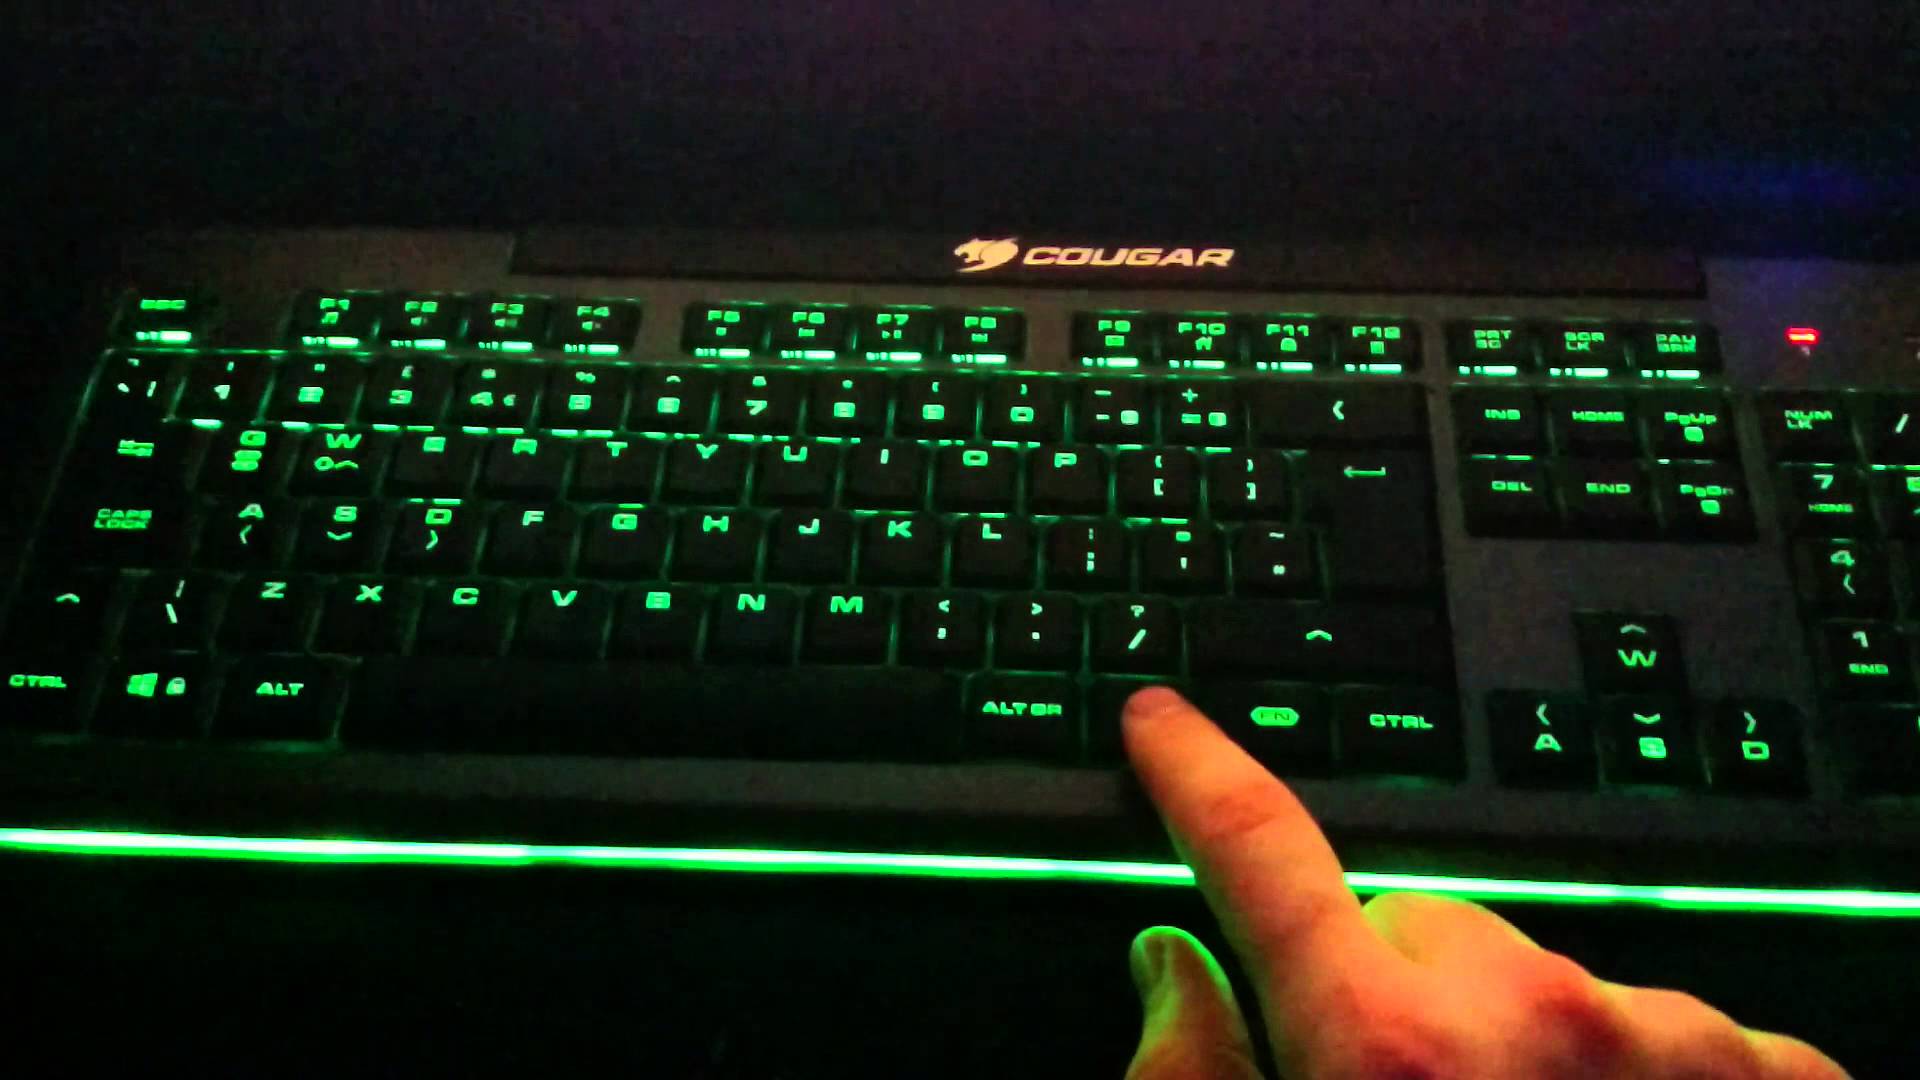 Cougar 200k keyboard light effects - YouTube